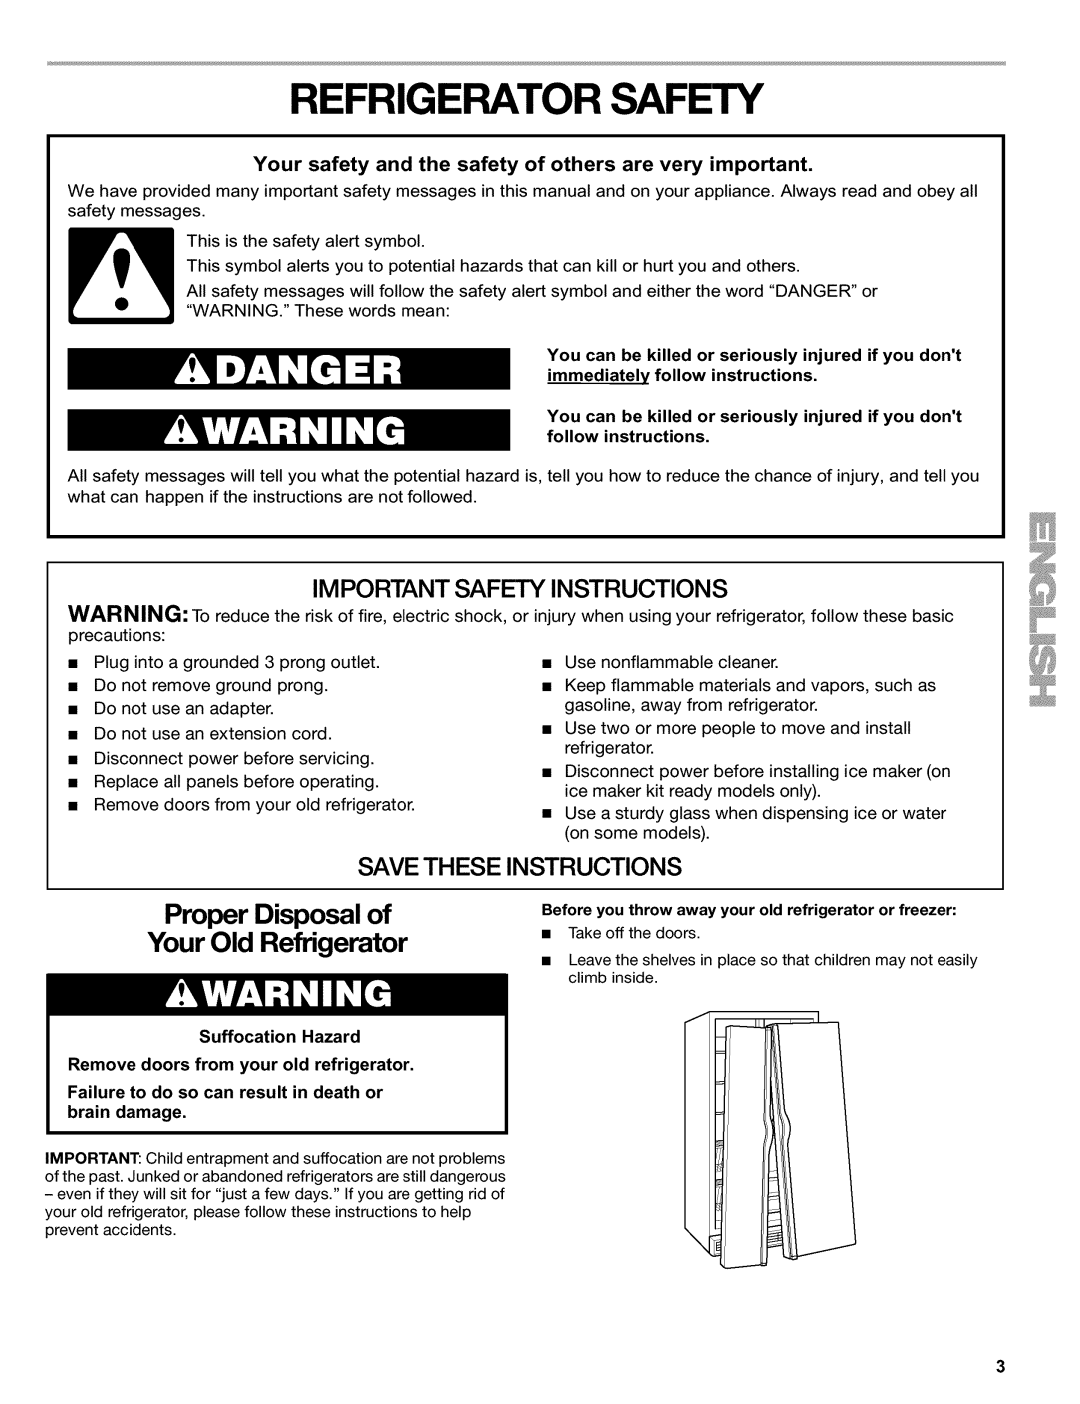 Kenmore 2220698 manual Refrigerator Safety, Im Portant Safety Instructions, Save These Instructions, Suffocation Hazard 